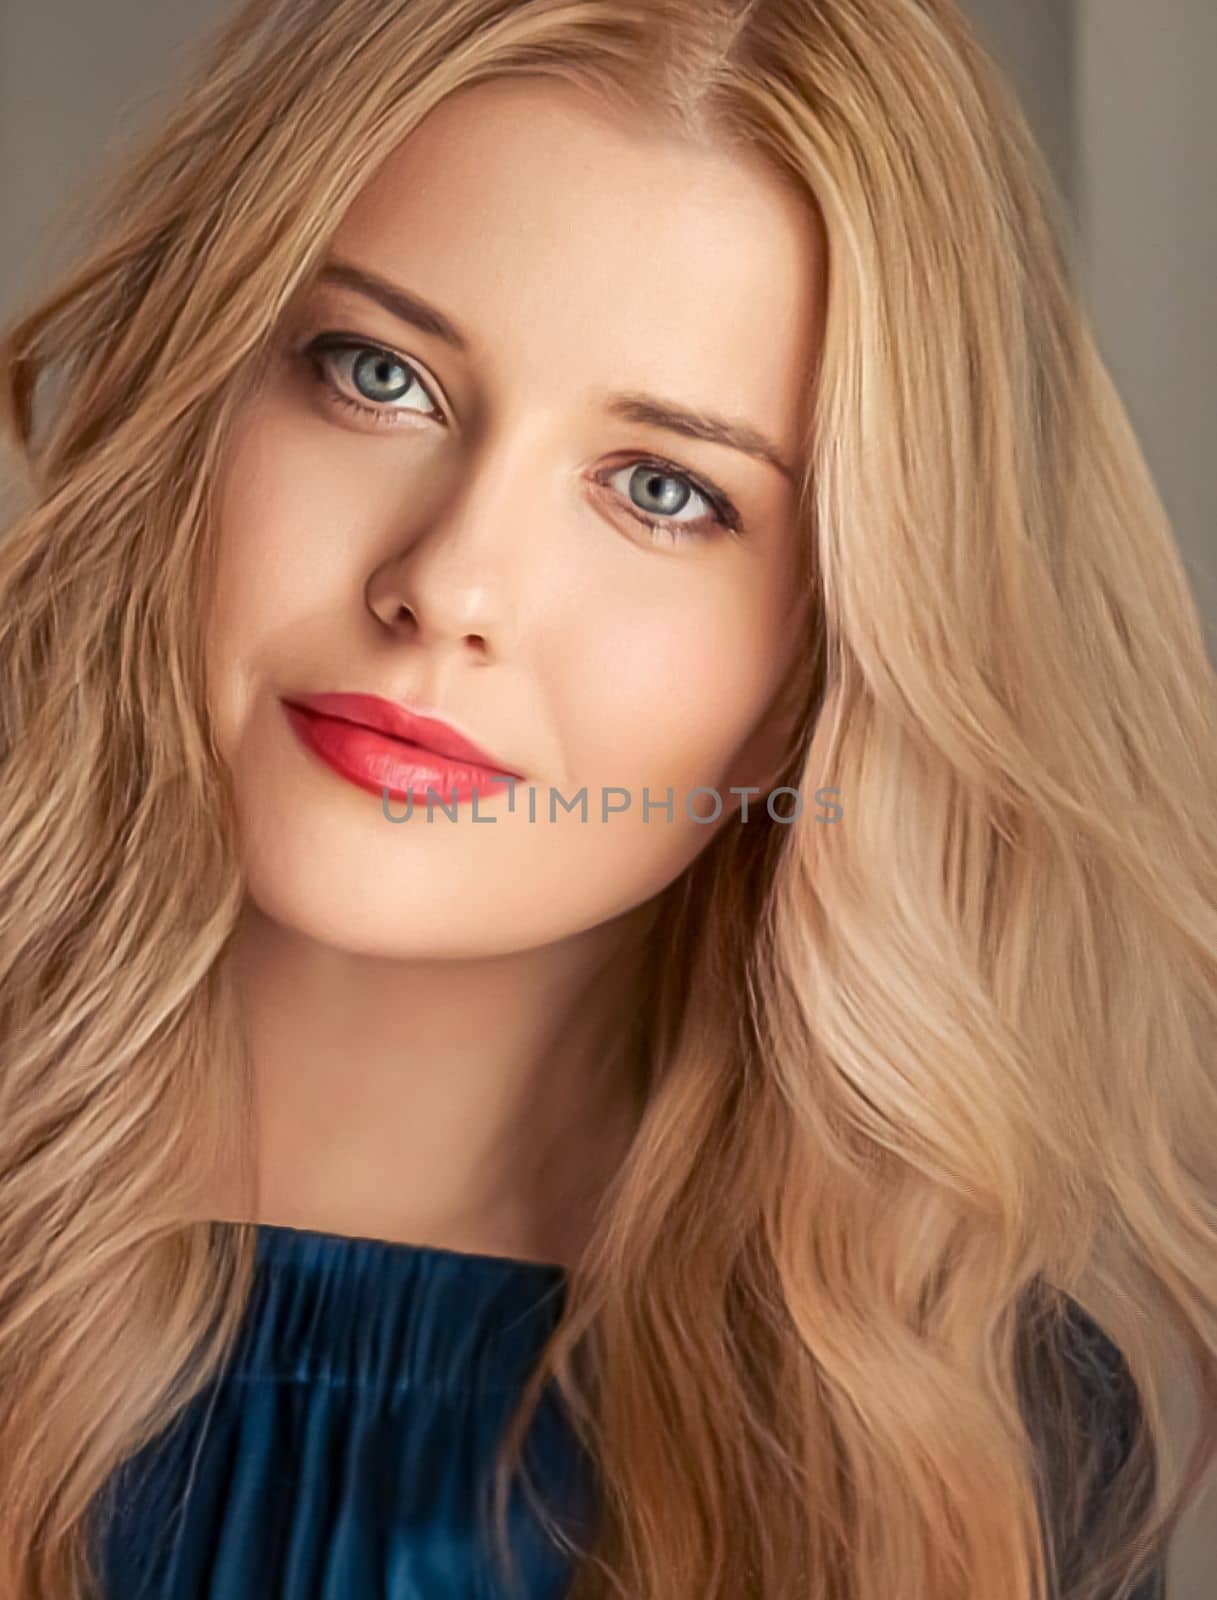 Beauty and femininity, beautiful blonde woman with long blond hair, natural portrait closeup